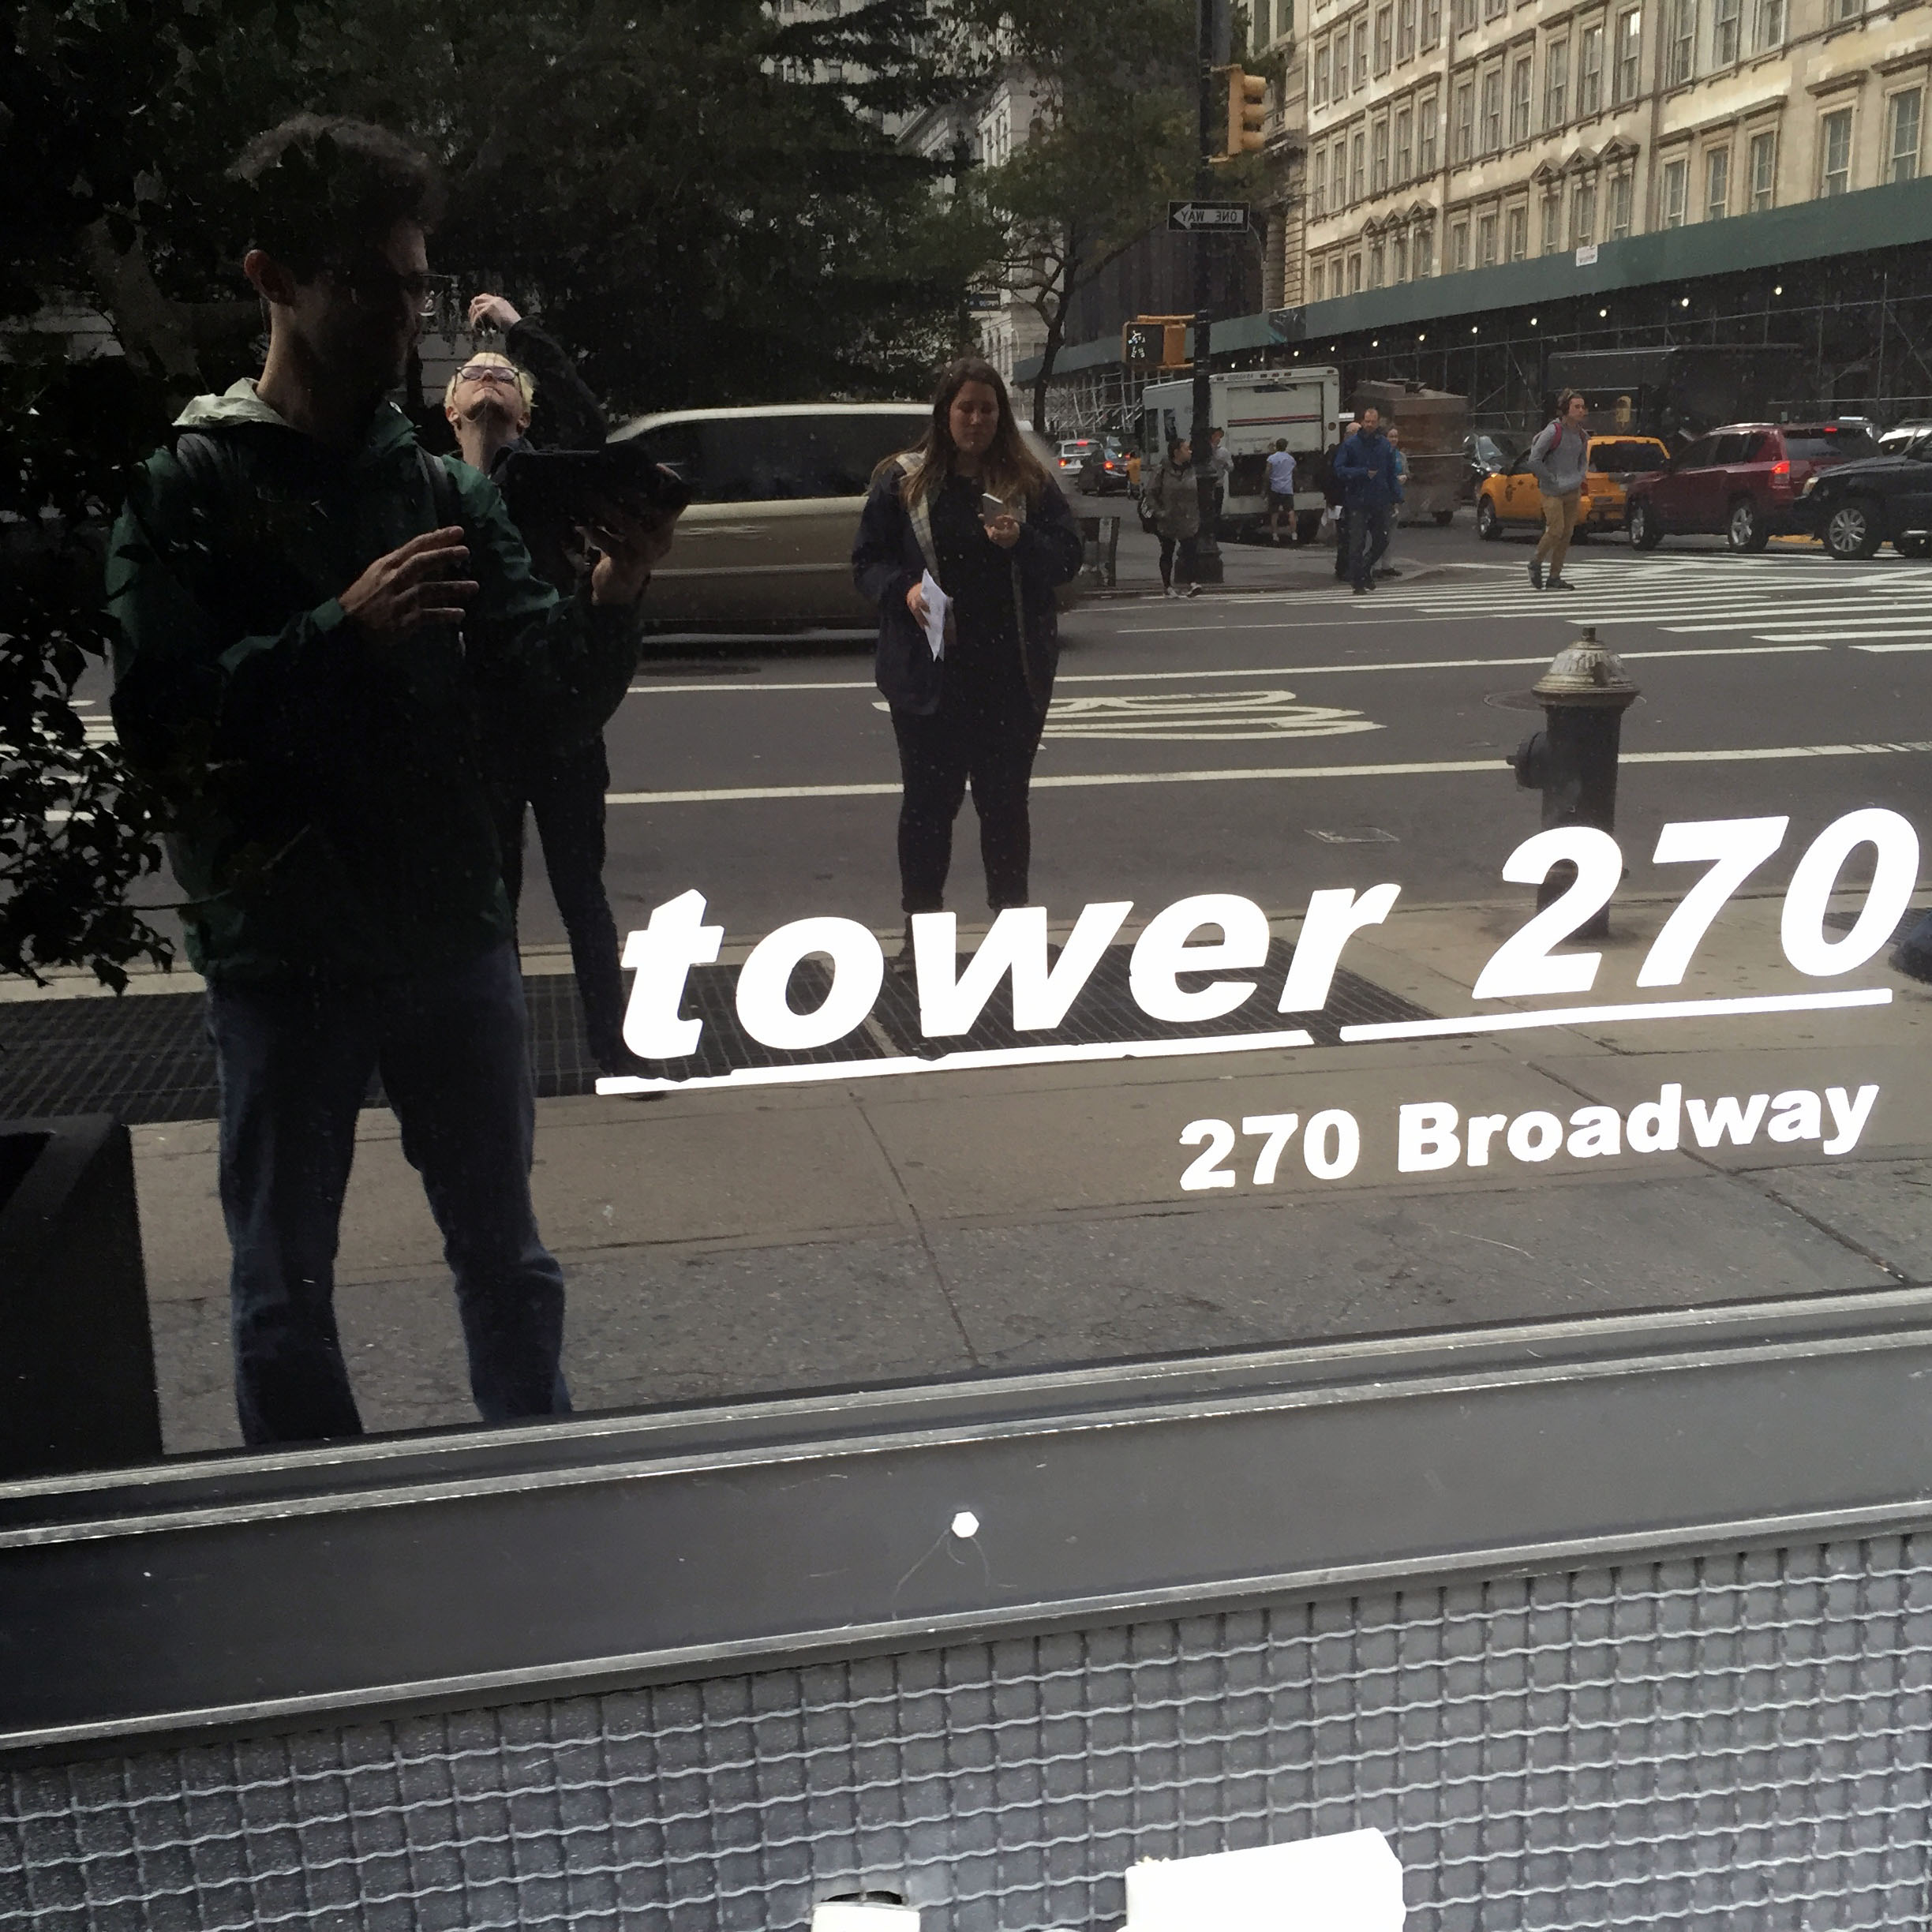 Address 270 Broadway.